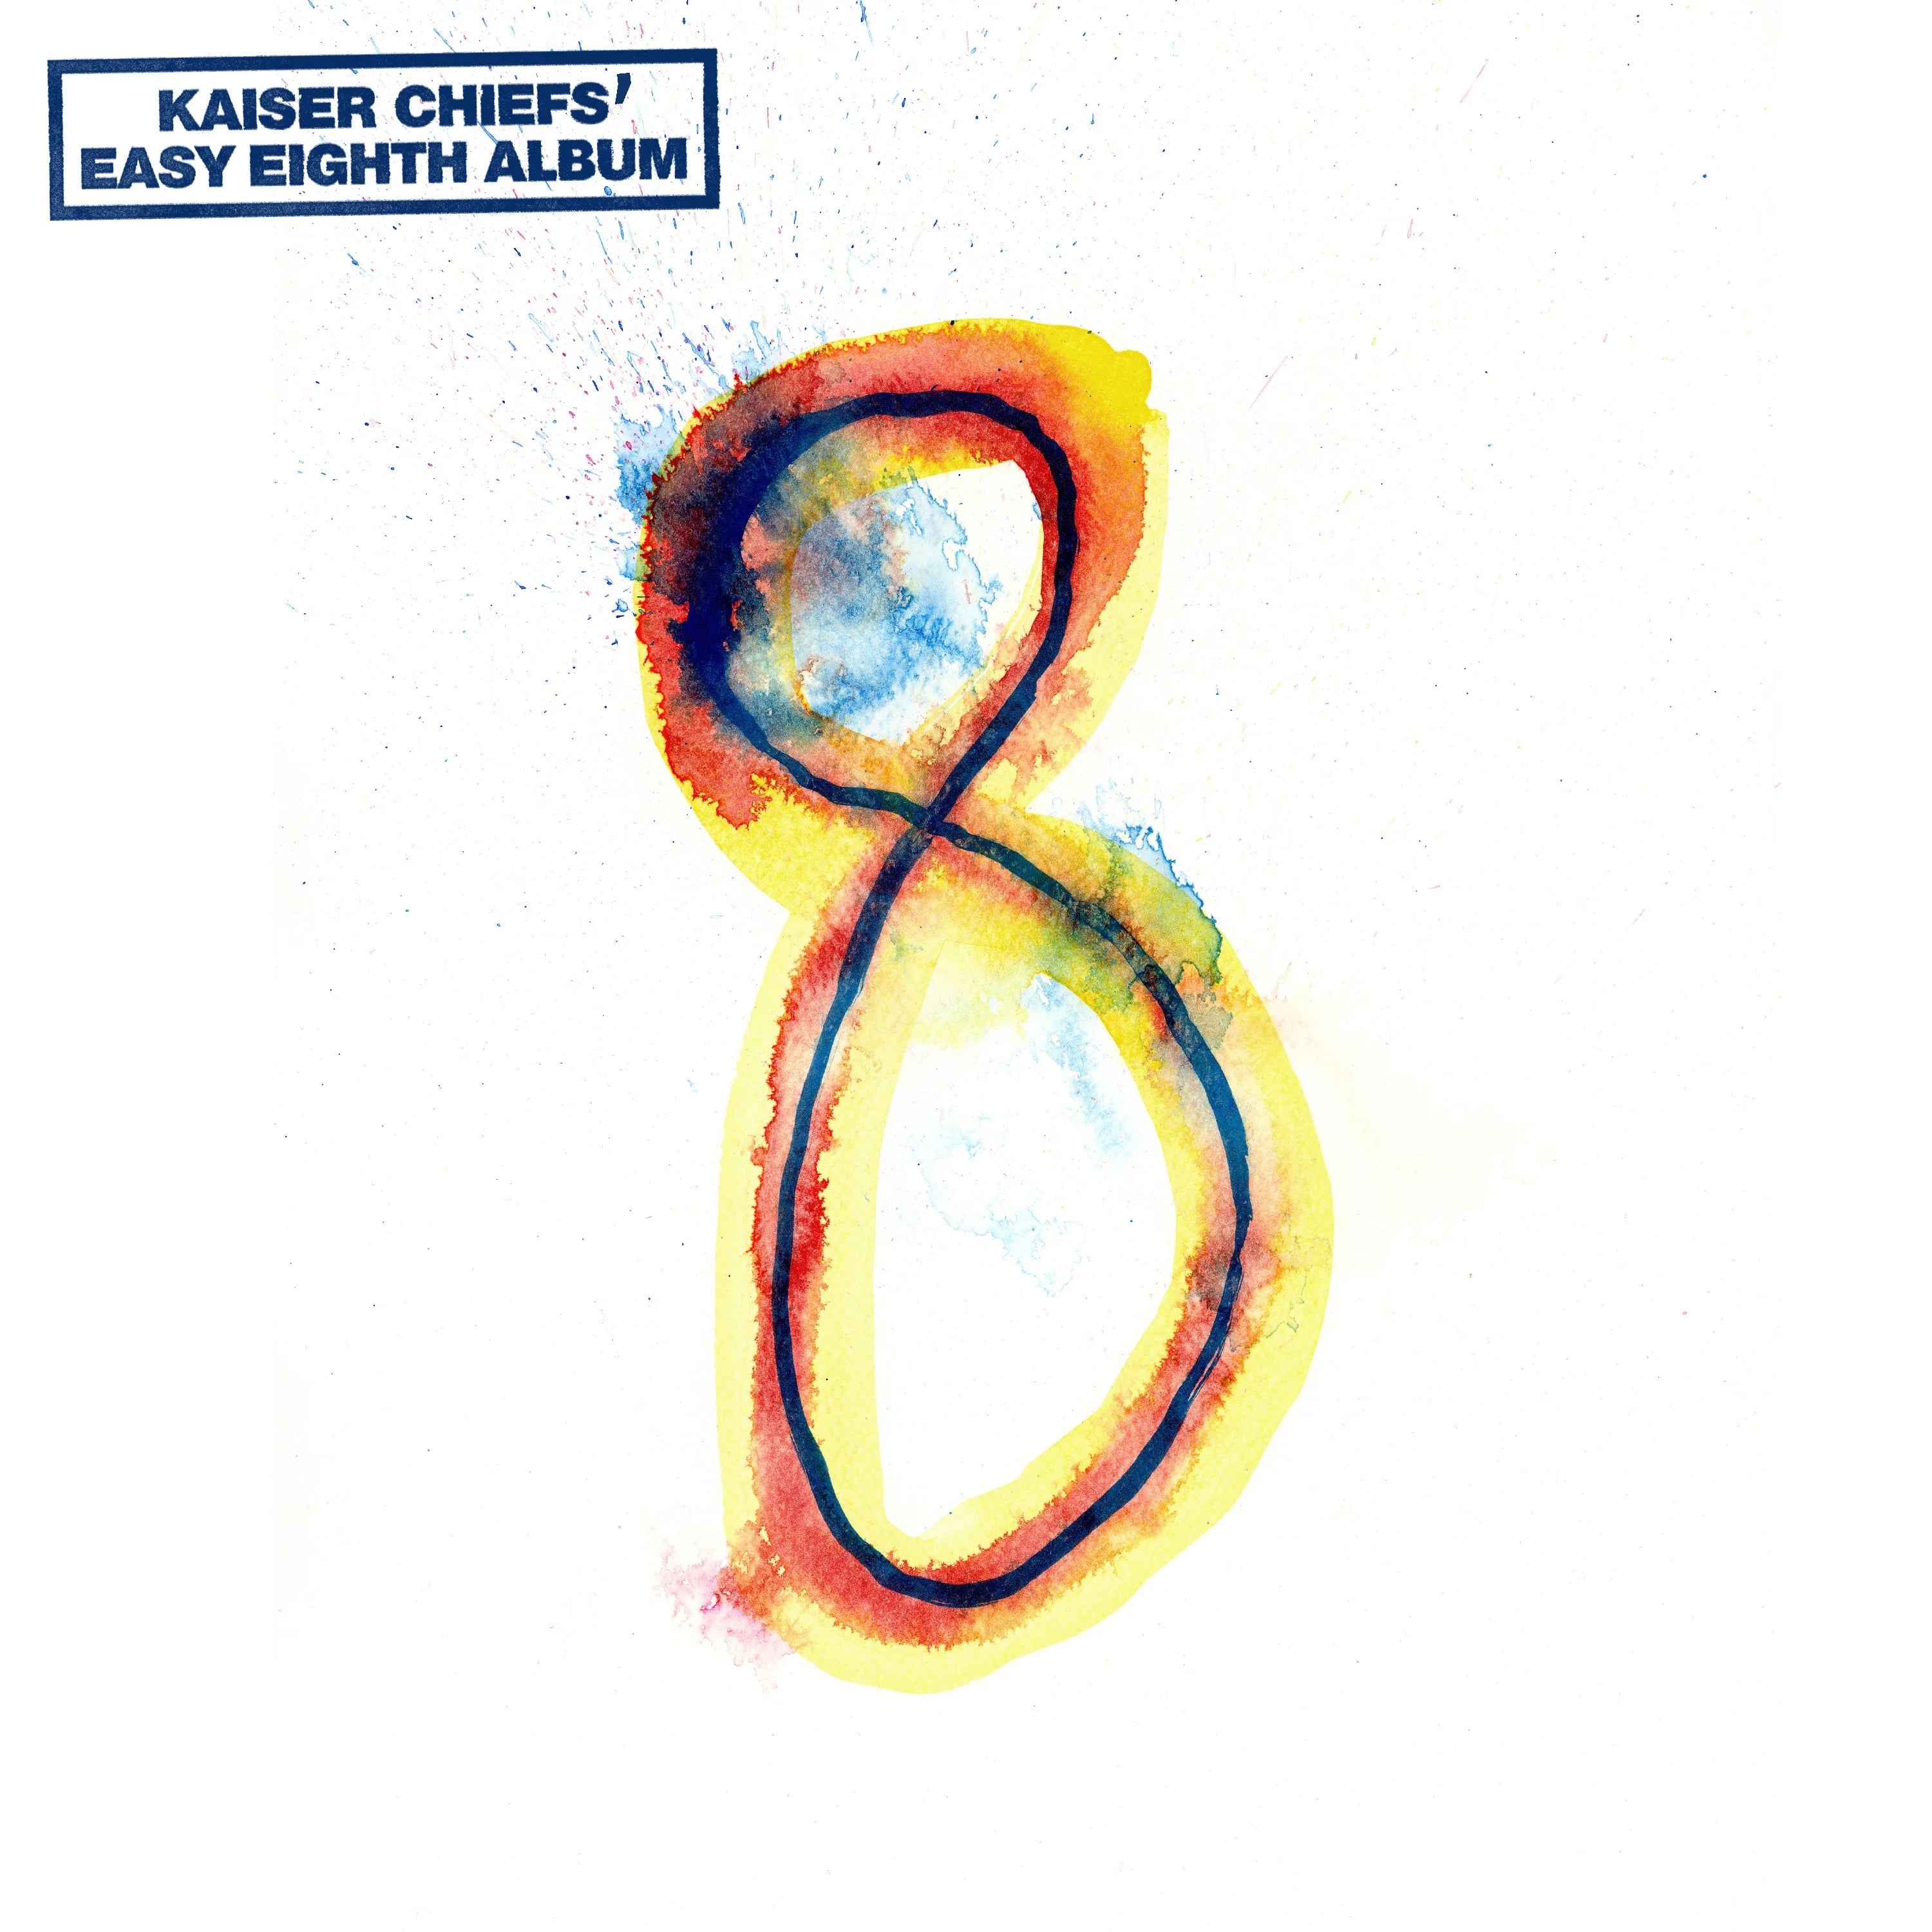 RSD KAISER CHIEFS - Kaiser Chiefs' Easy Eighth Album - 12" Picture Disc Vinyl - RSD 2024